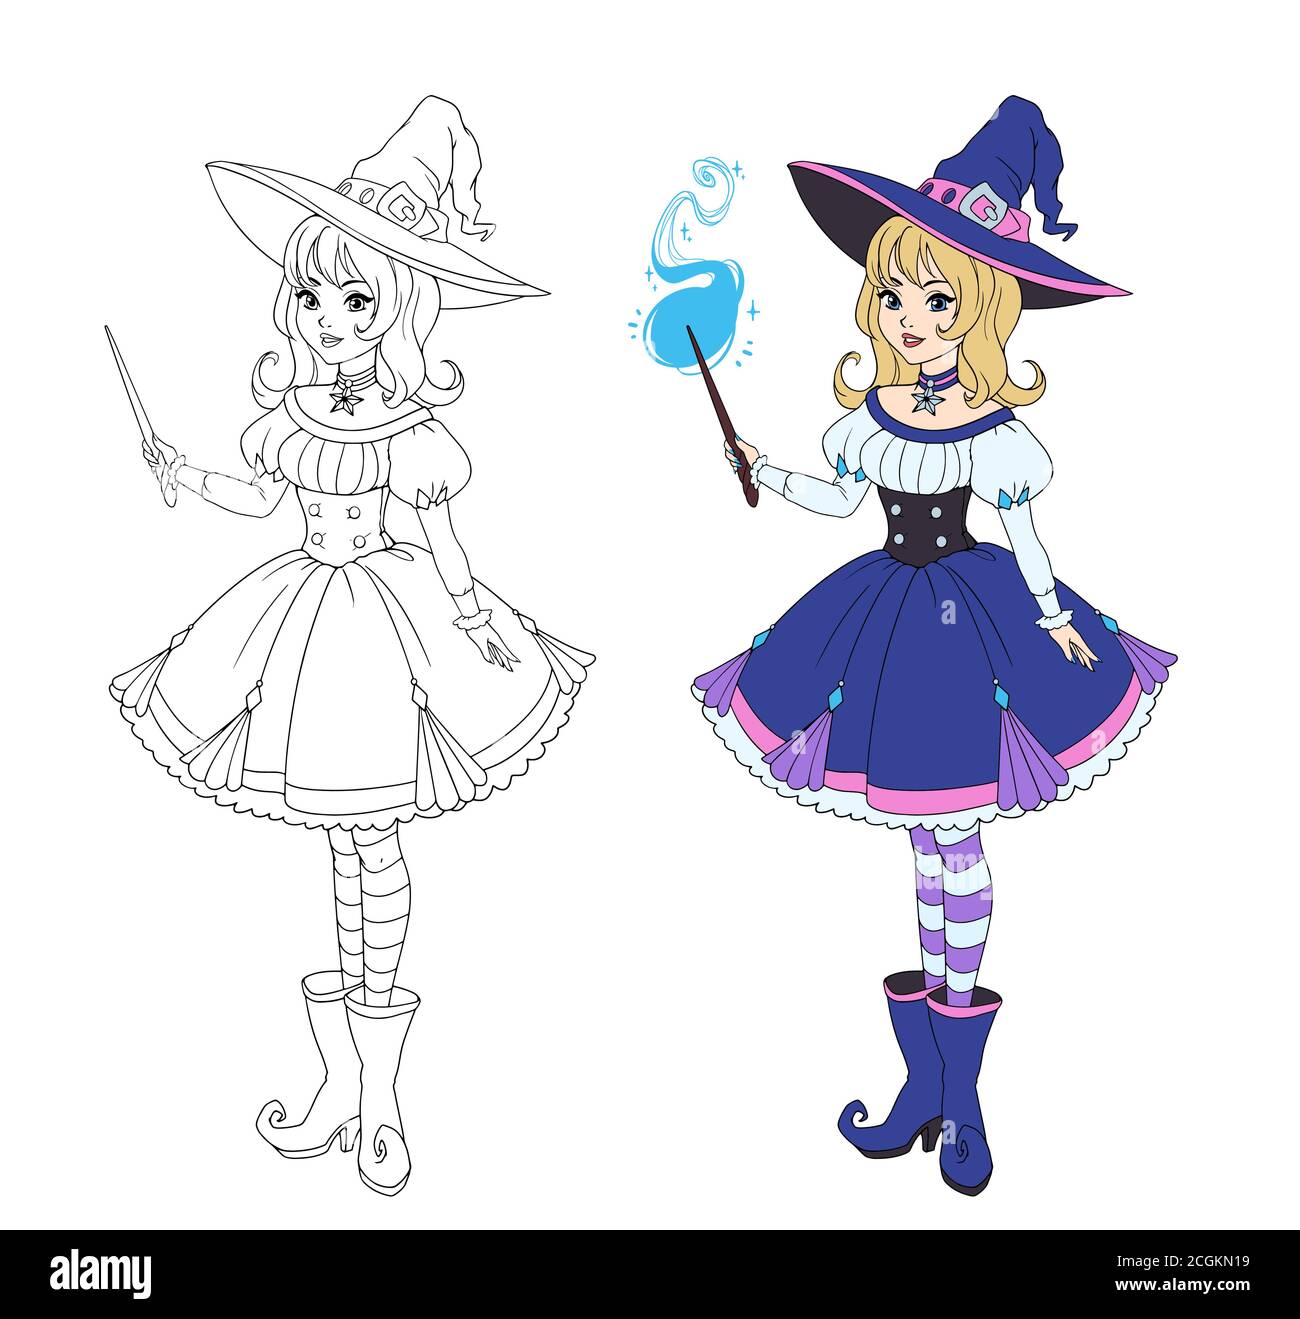 Desktop Wallpaper Cute Witch Anime Girl Experiments Original Hd Image  Picture Background 8c5d7d